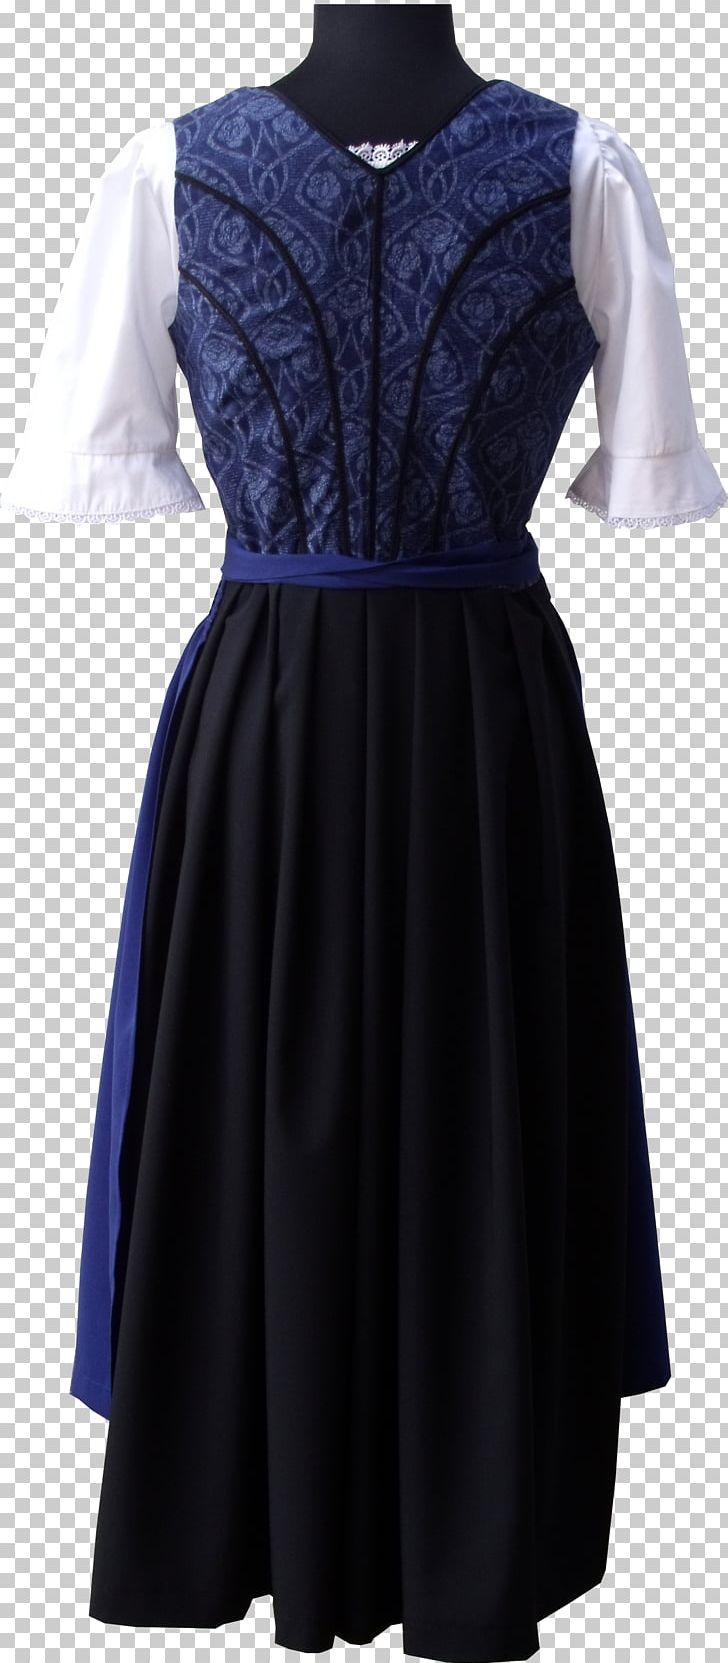 Little Black Dress Satin Sleeve Neck PNG, Clipart, Blue, Clothing, Cobalt Blue, Cocktail Dress, Day Dress Free PNG Download